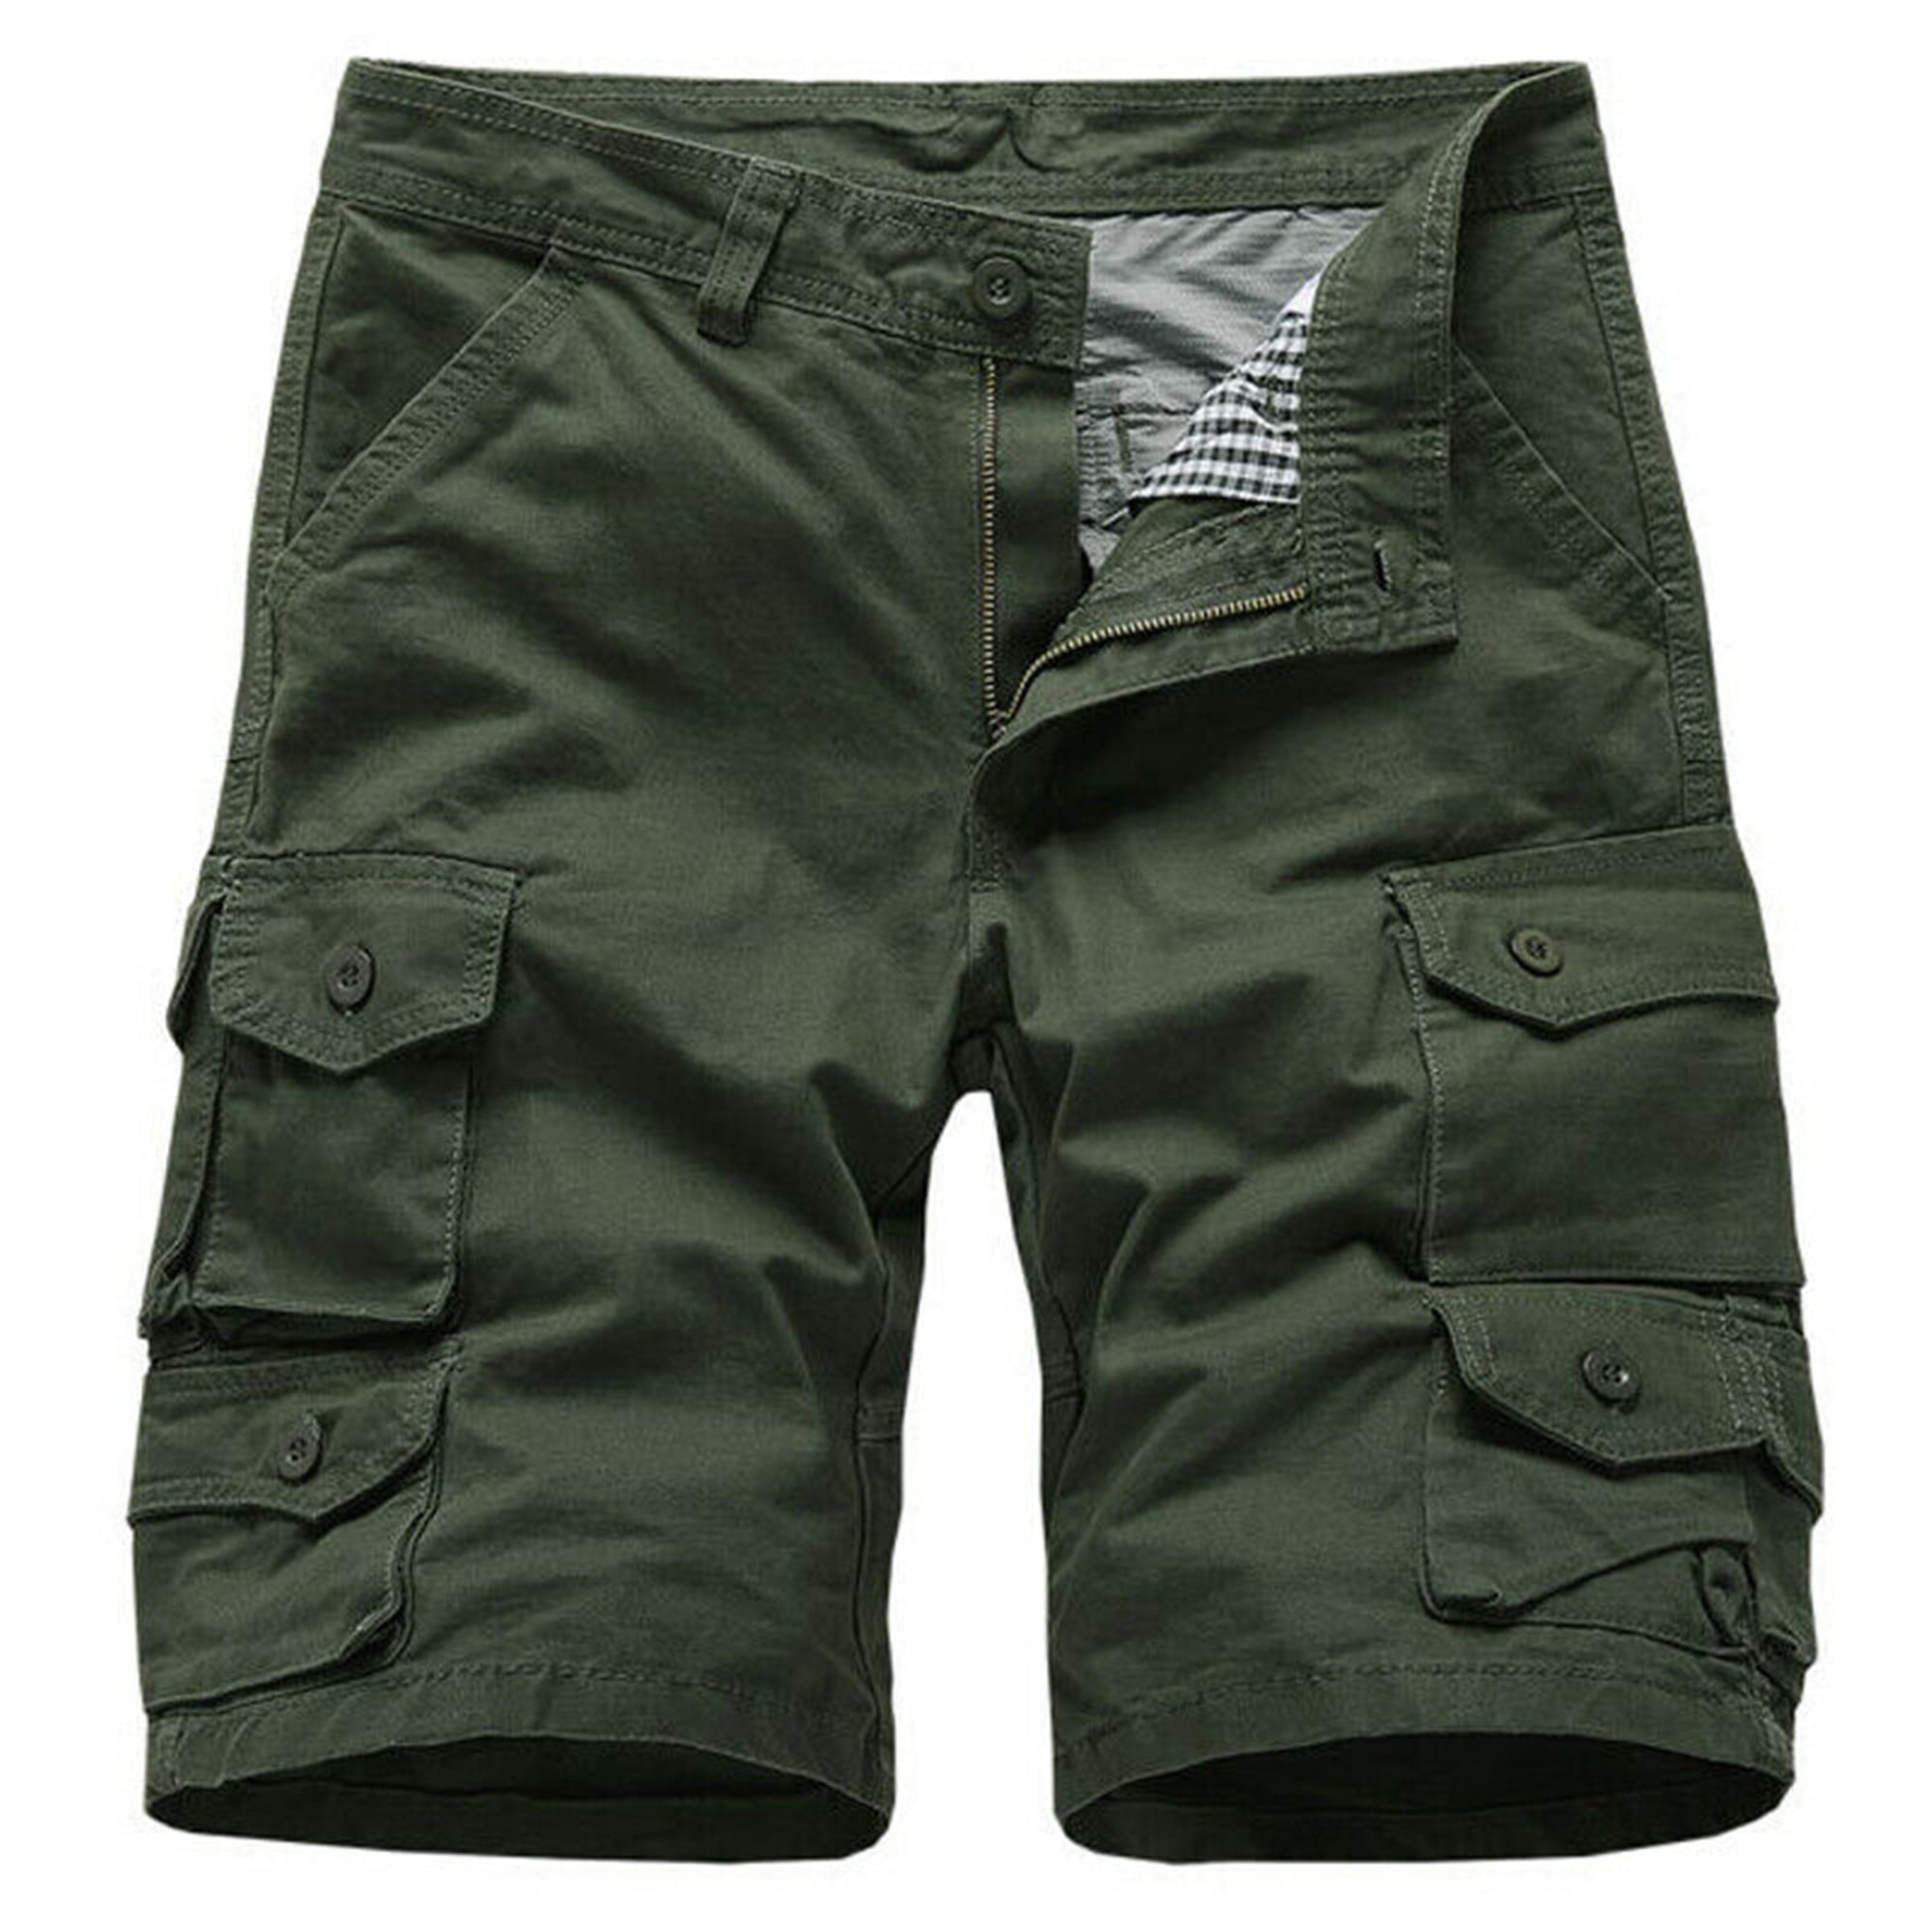 Men Sport Plain Cargo Shorts Military Combat Pants Multi-Pocket Waist Size 28-38 